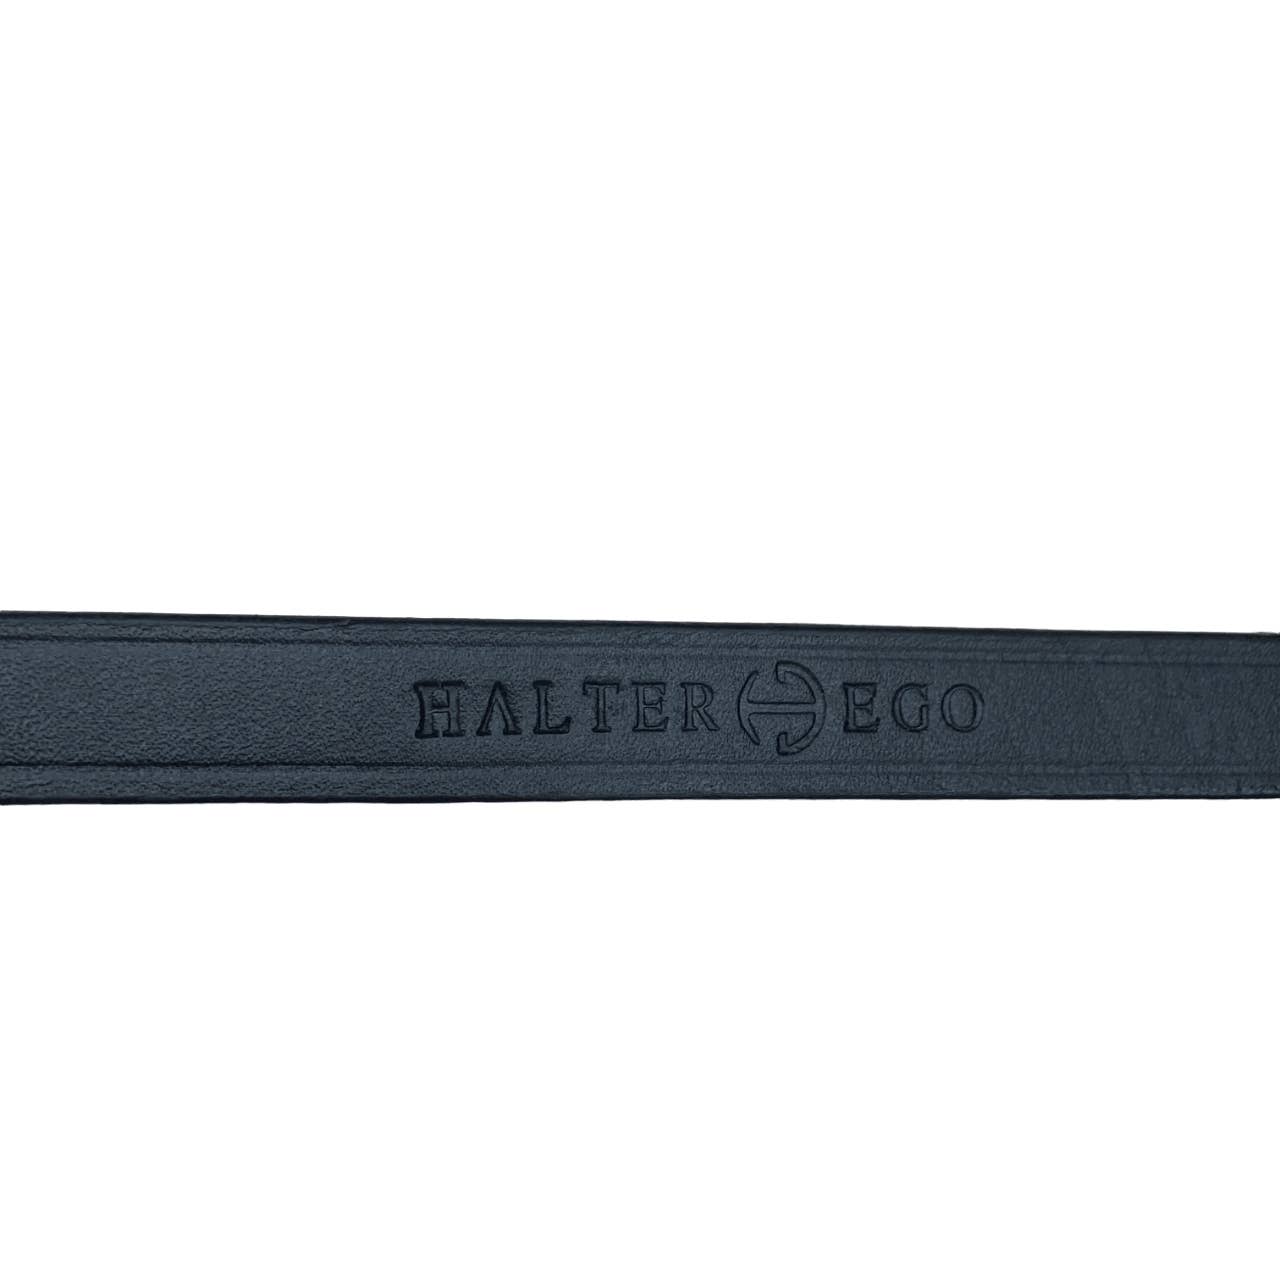 Halter Ego 'Luxury' Rubber Grip Leather Reins in Brown - 54"